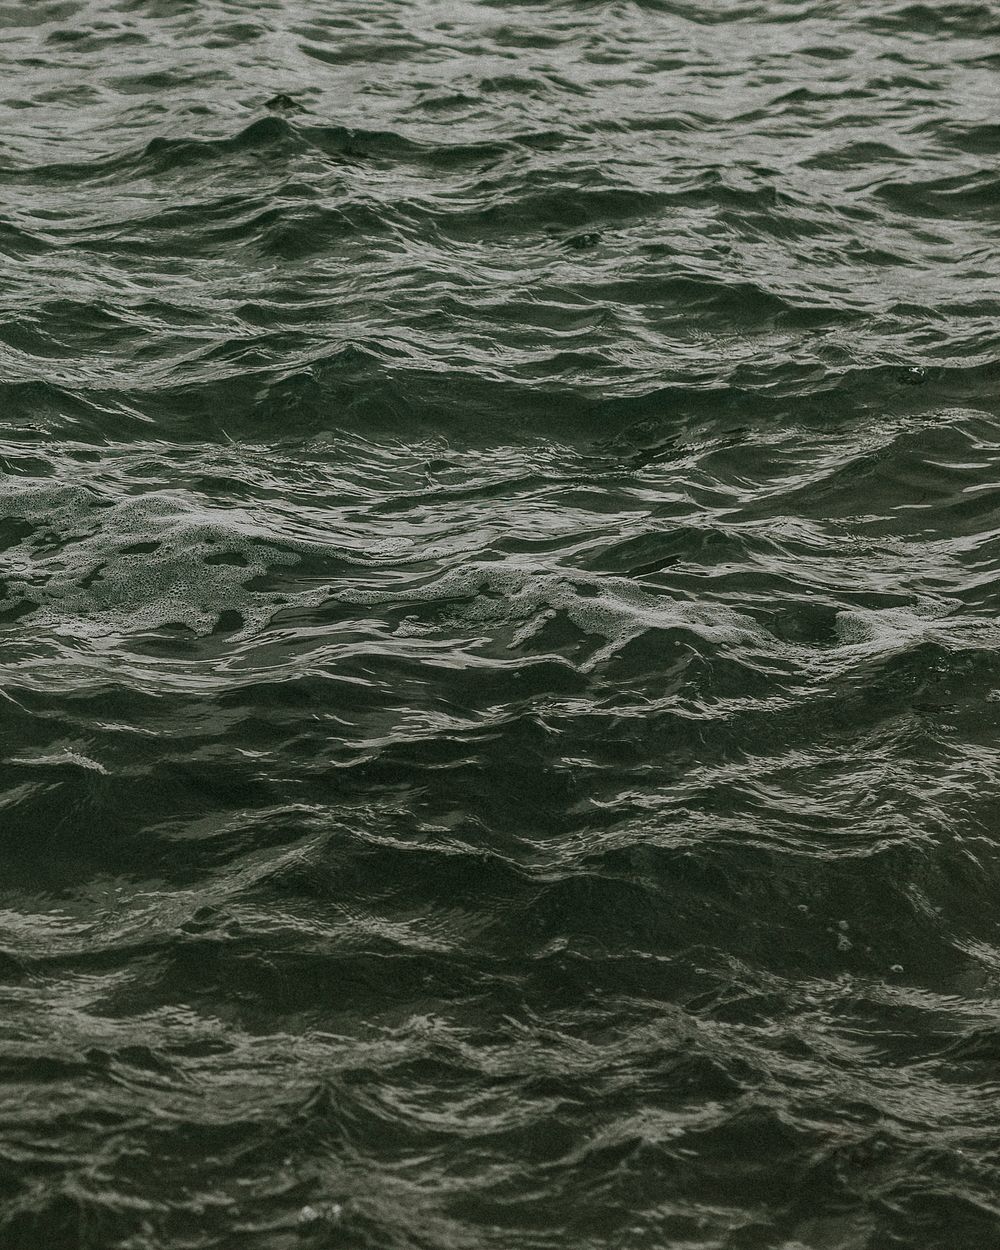 Gray calm waves of the ocean